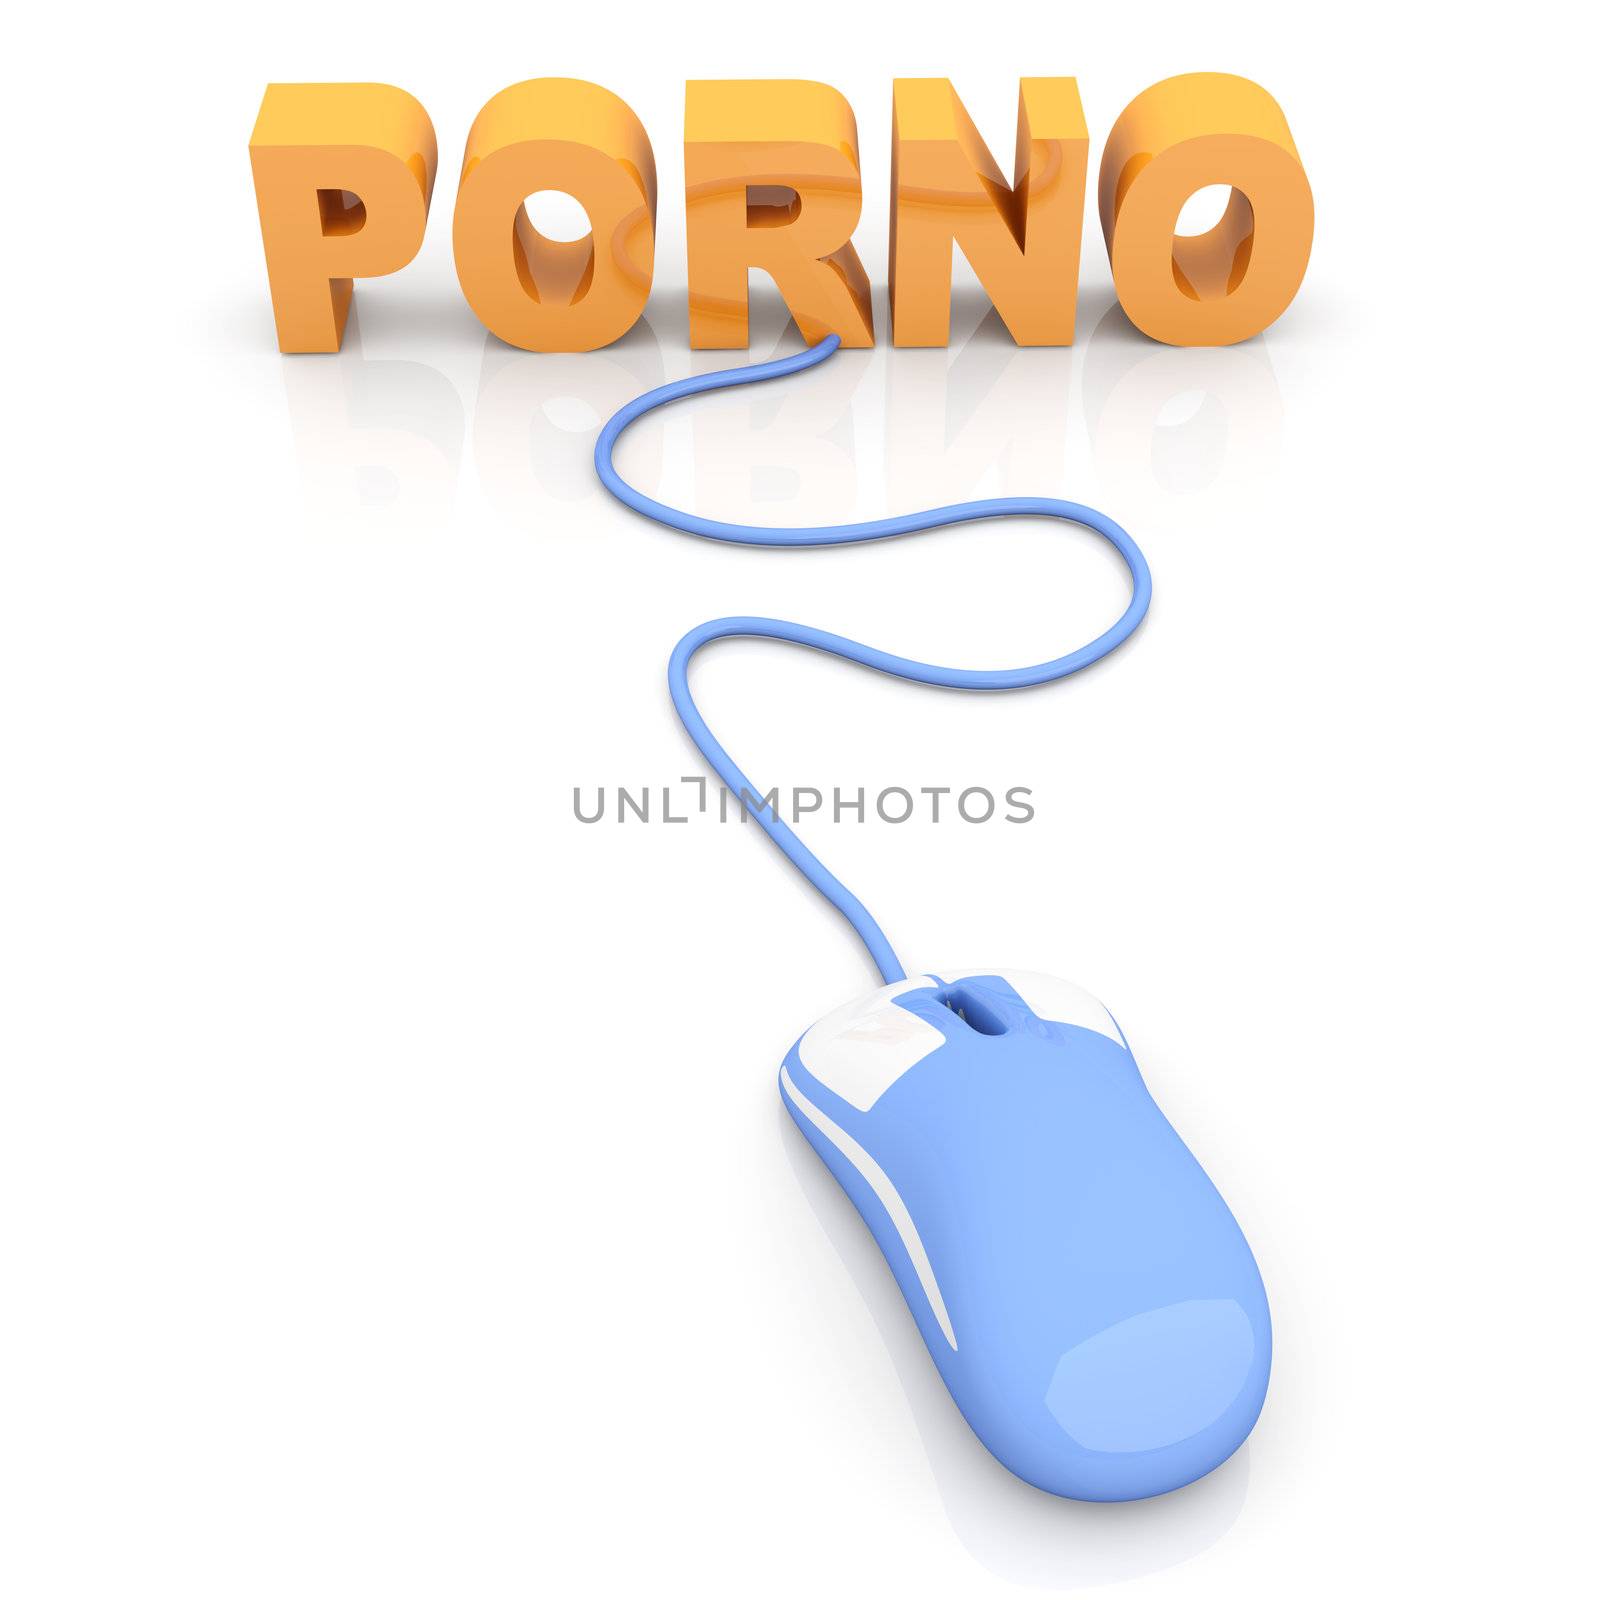 Porno click	 by Spectral